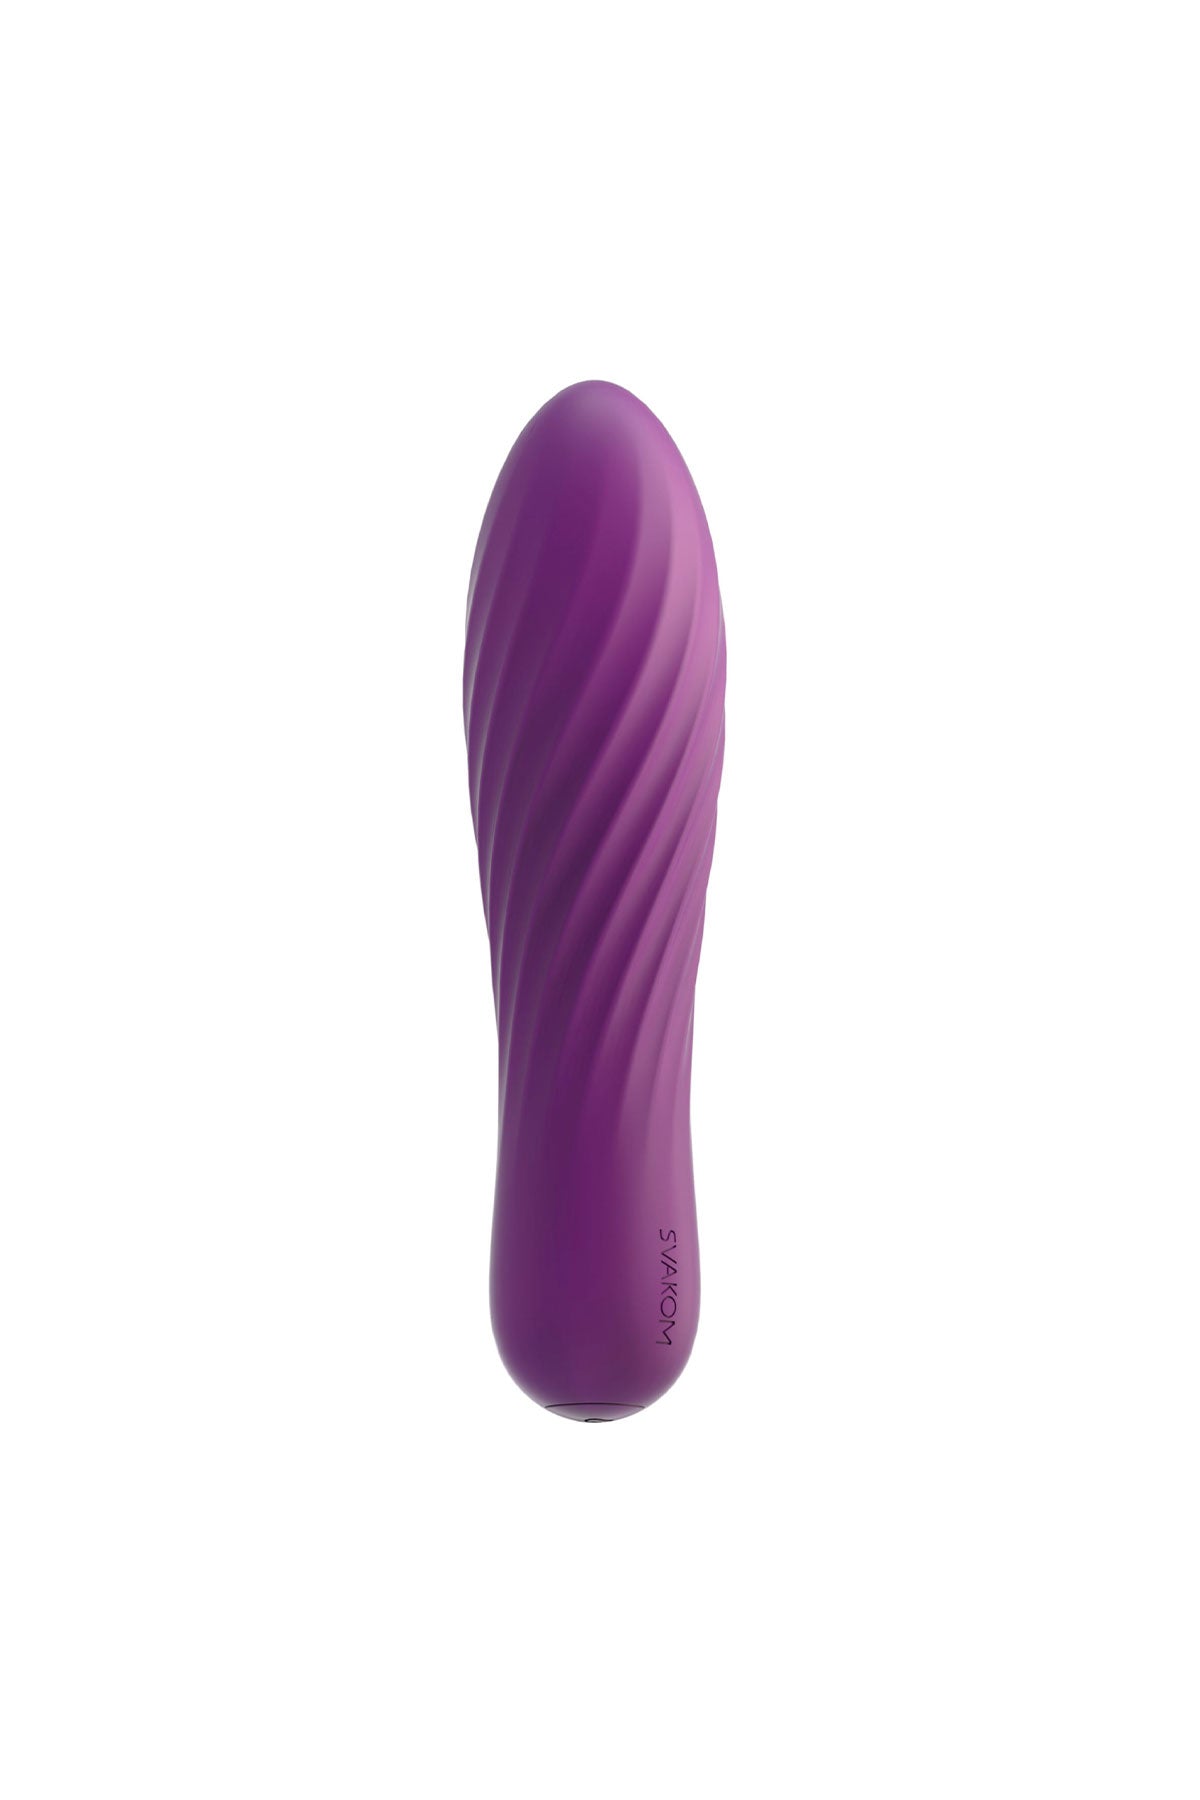 Purple Tulip Clitoral Vibrator by Svakom